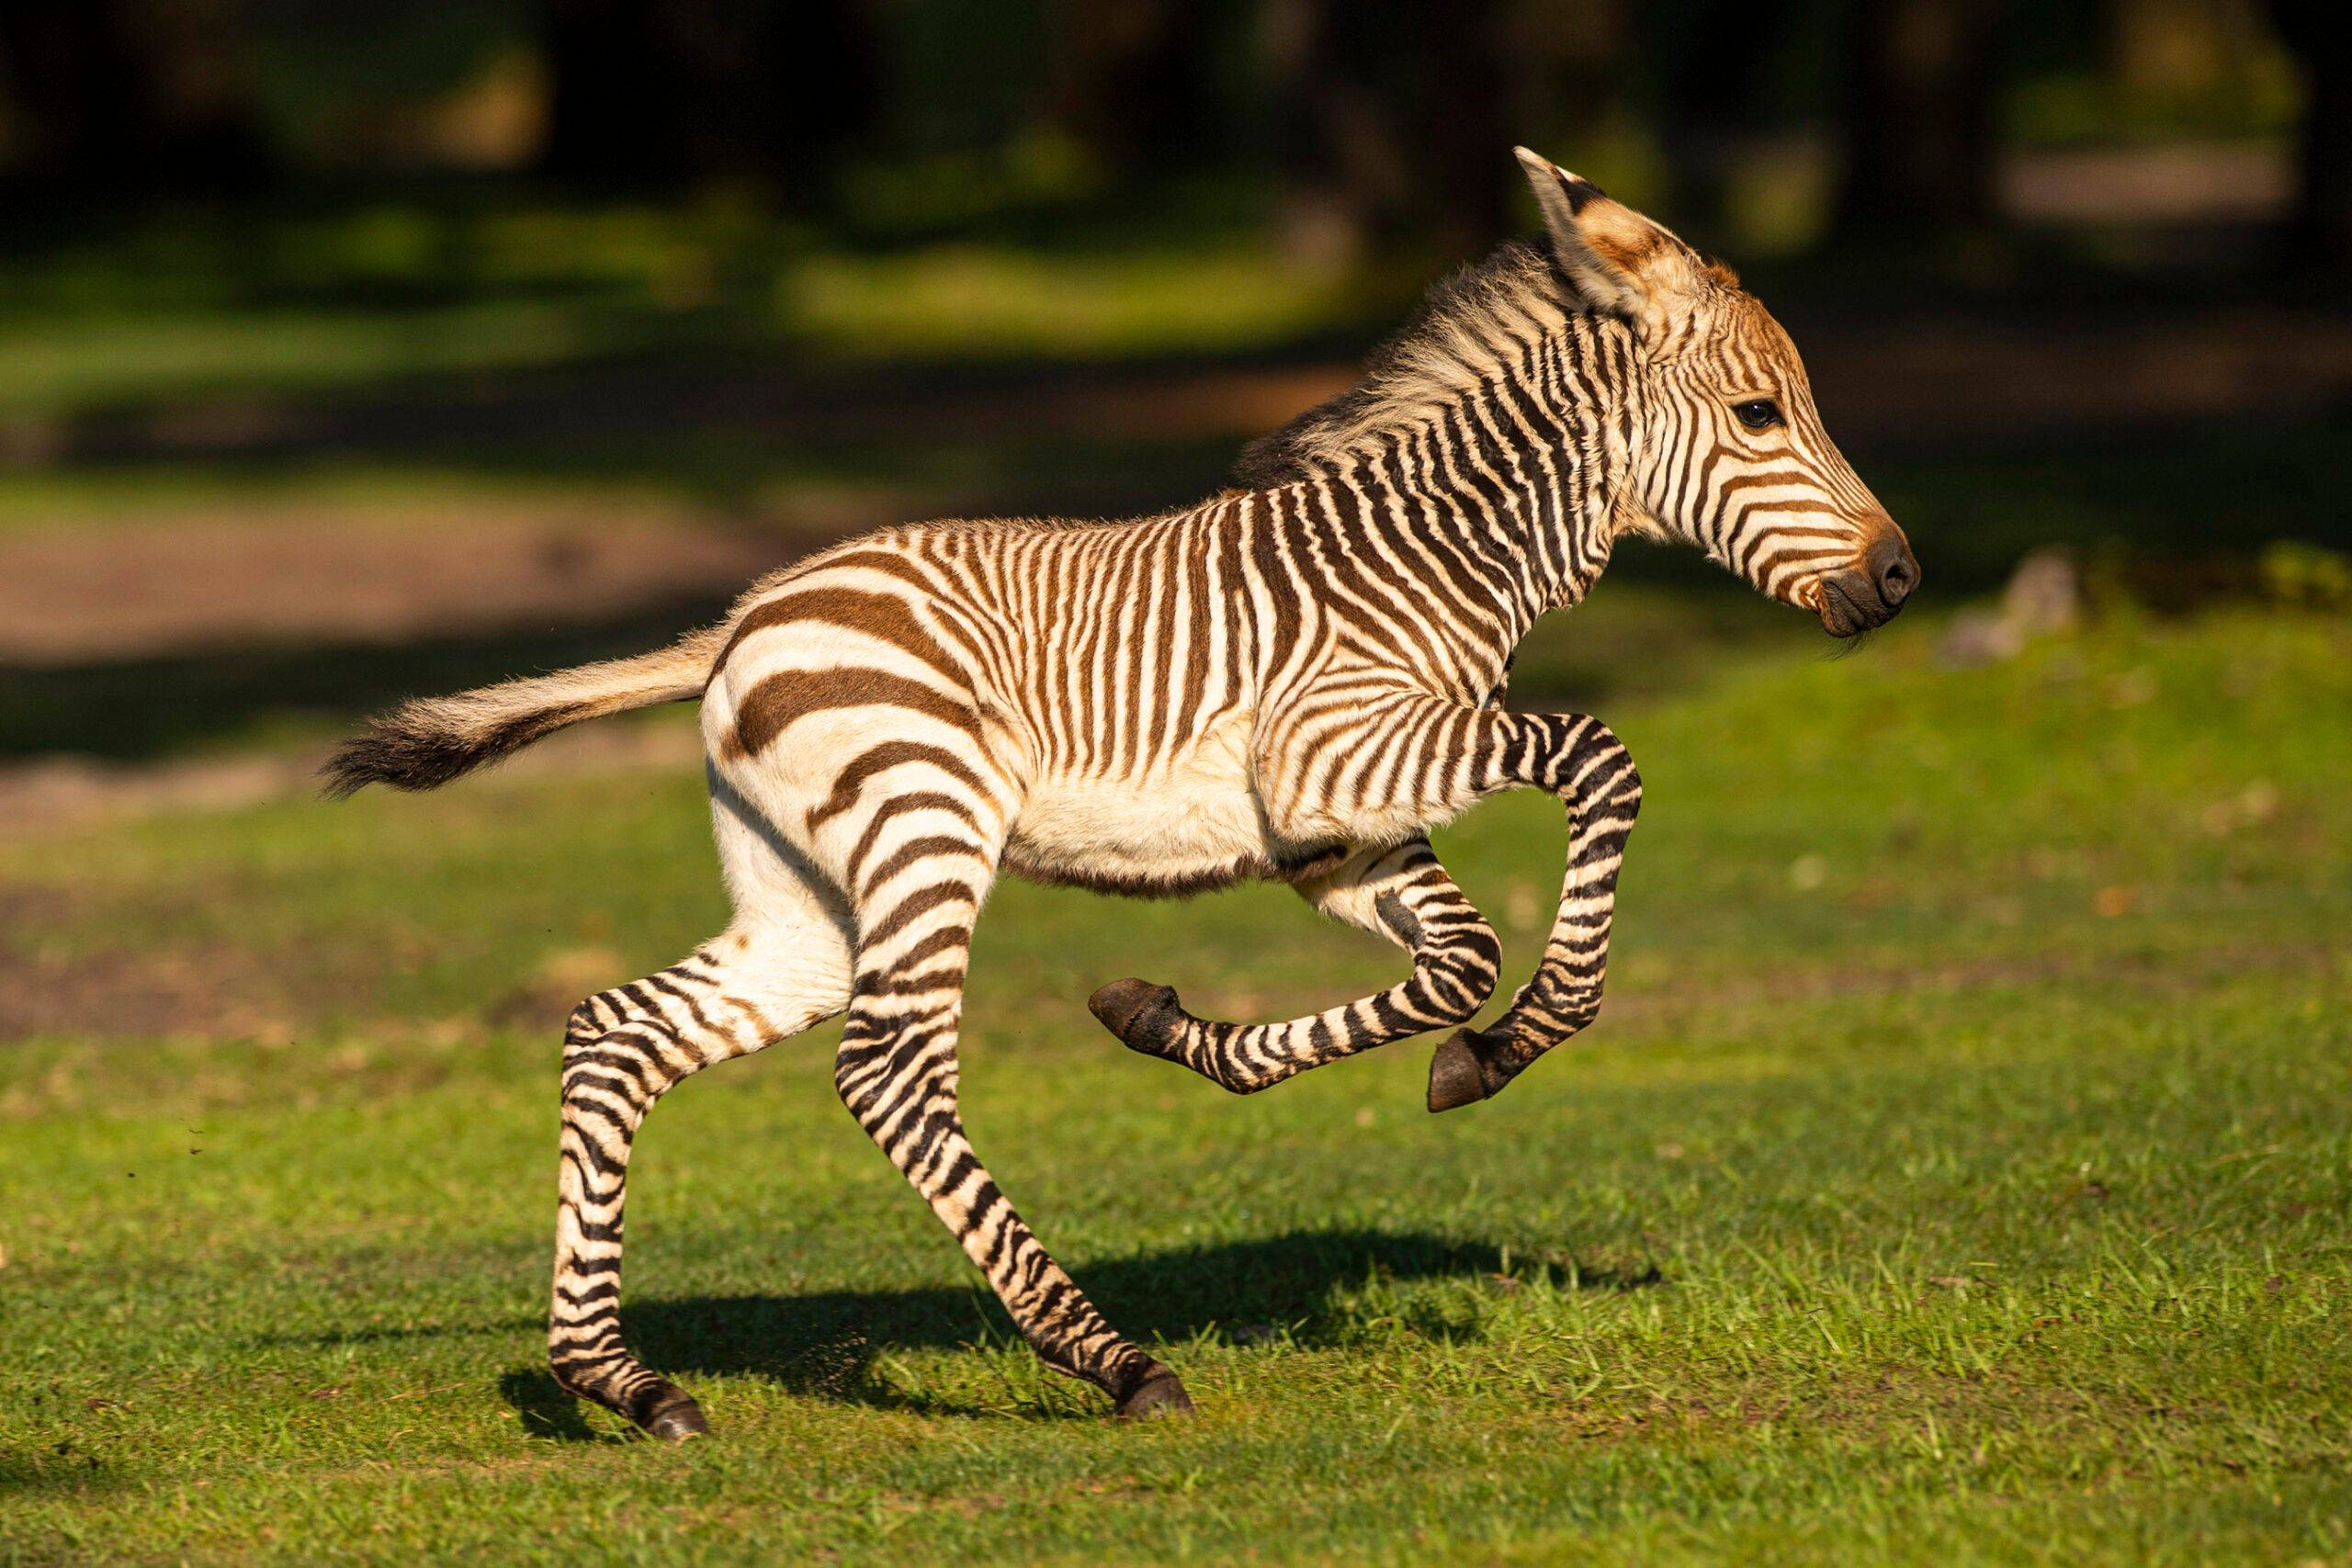 Hartmann's Mountain zebra foal born at Disney's Animal Kingdom gets named 'Dash'